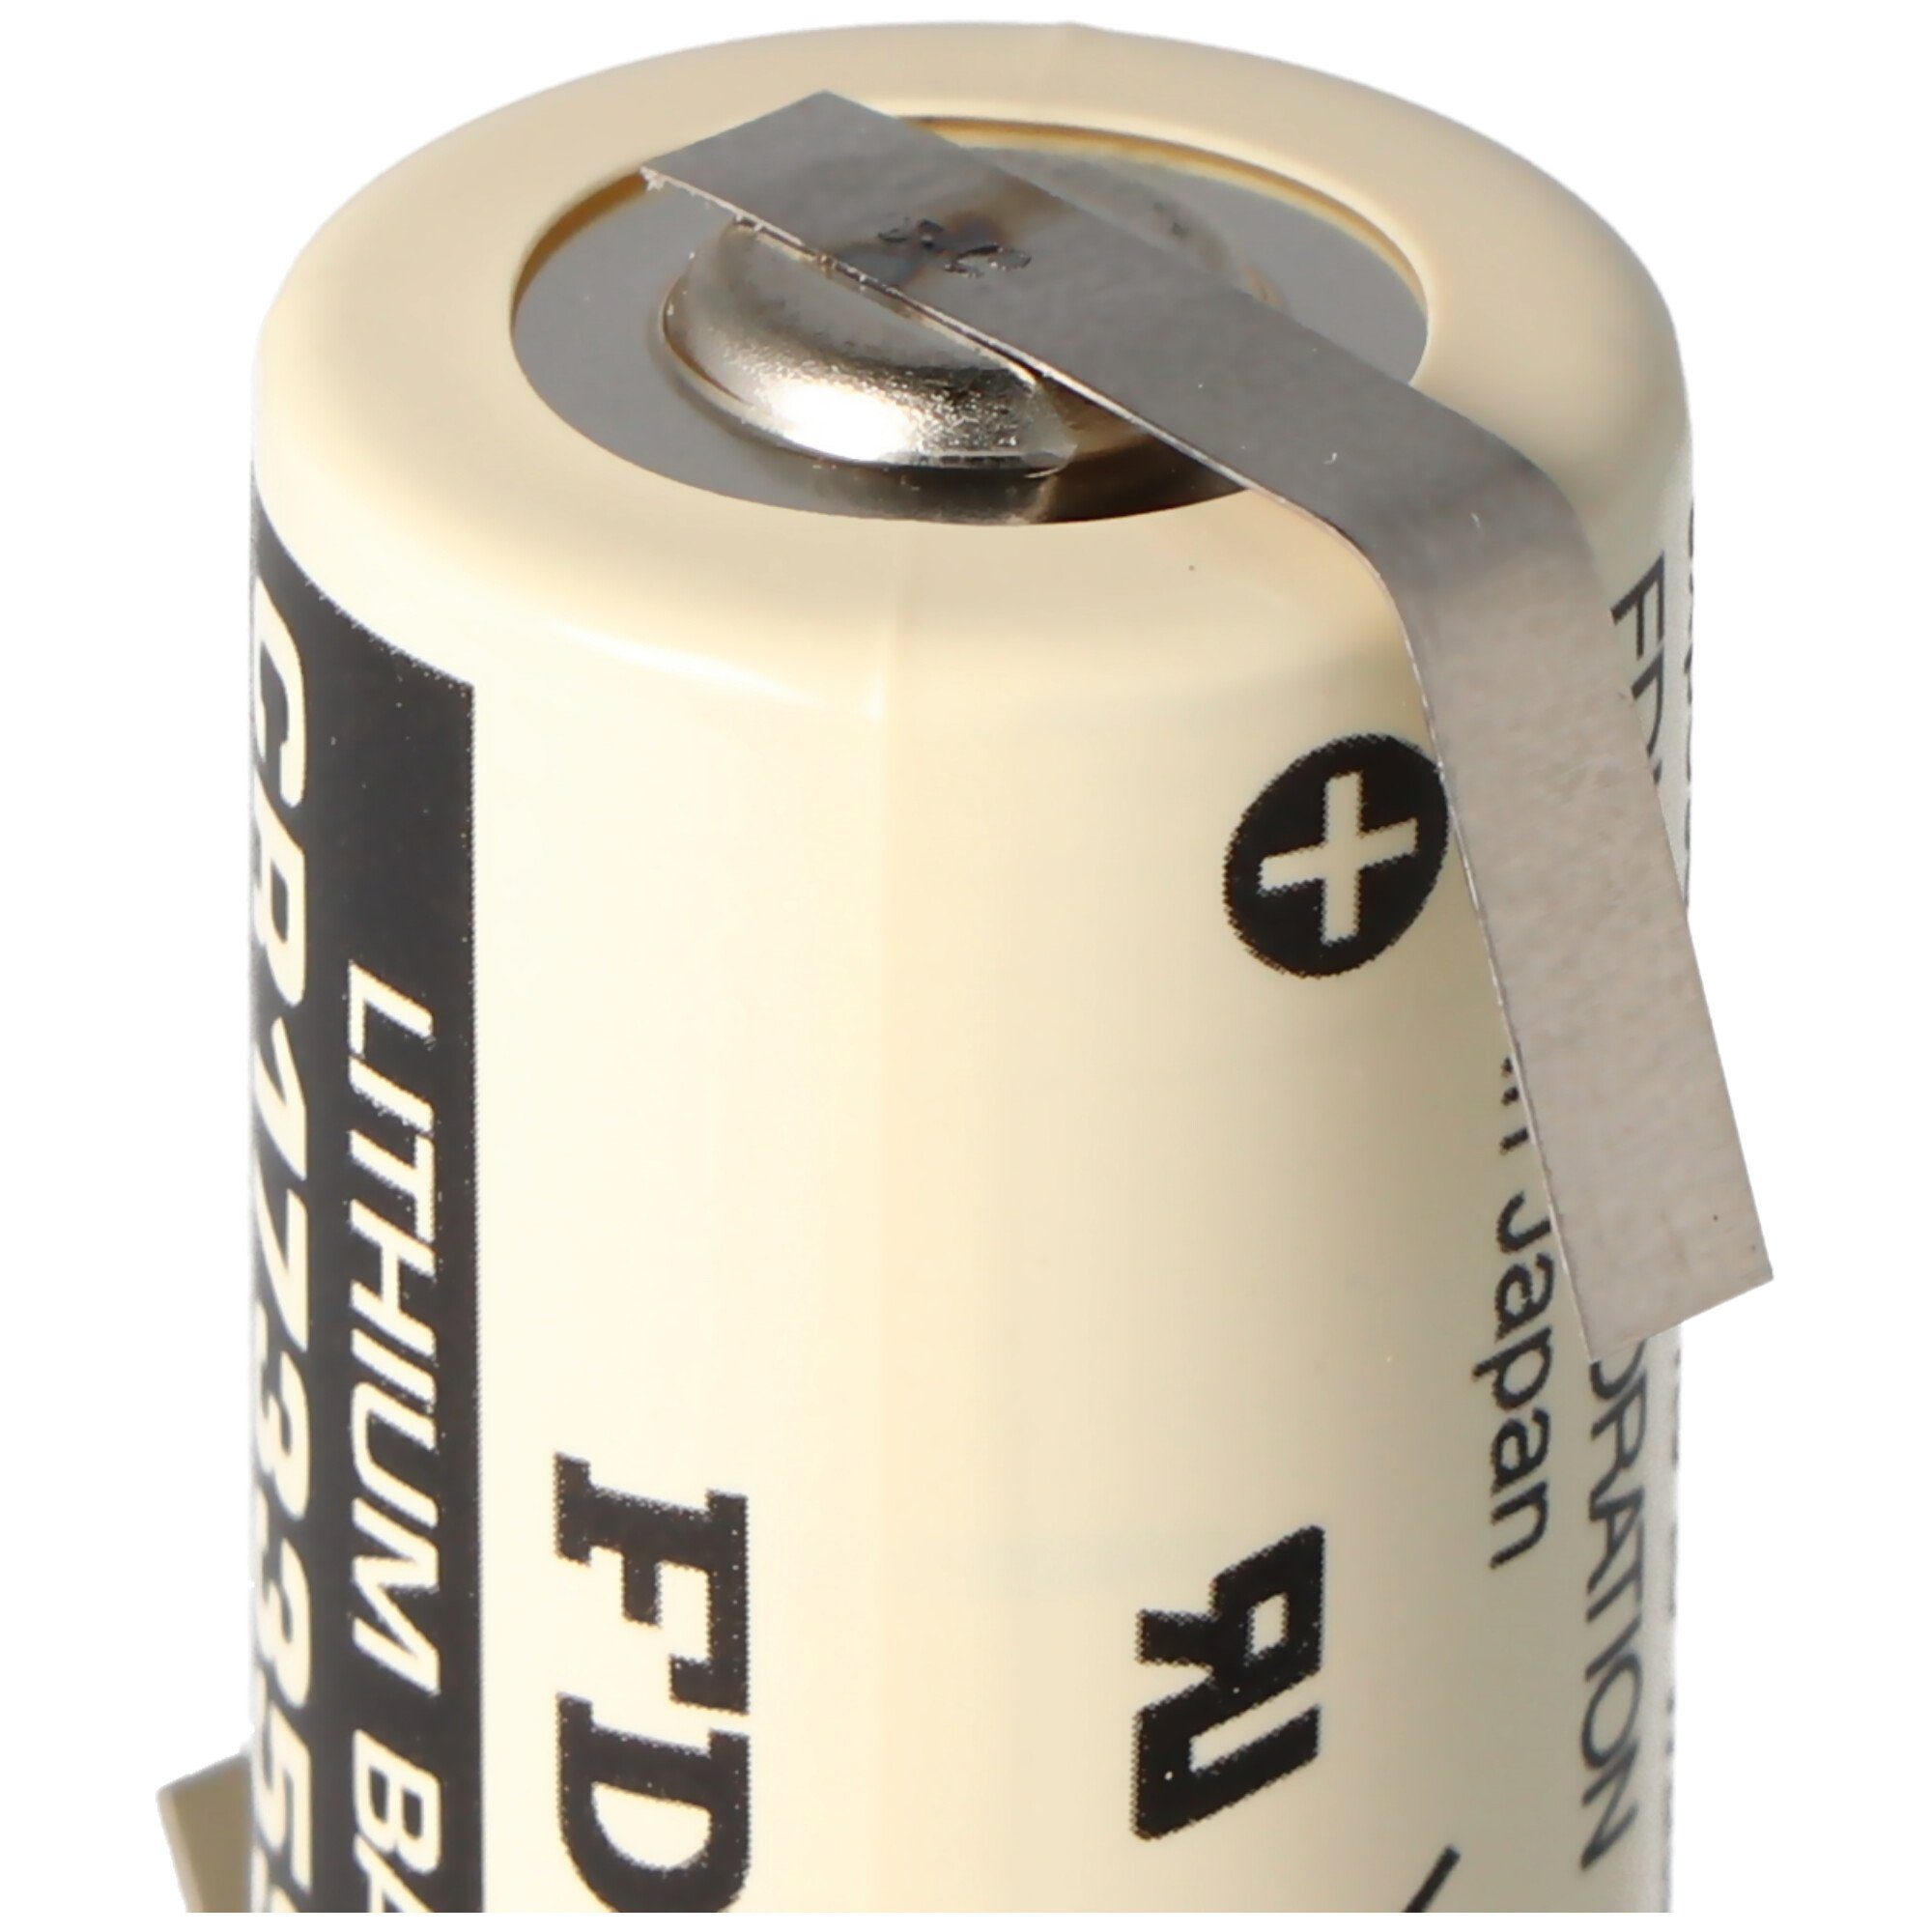 SE Batterie, Z-Form 2/3A, Lötfahne Sanyo (3,0 Size CR17335 Batterie Sanyo mit V) Lithium